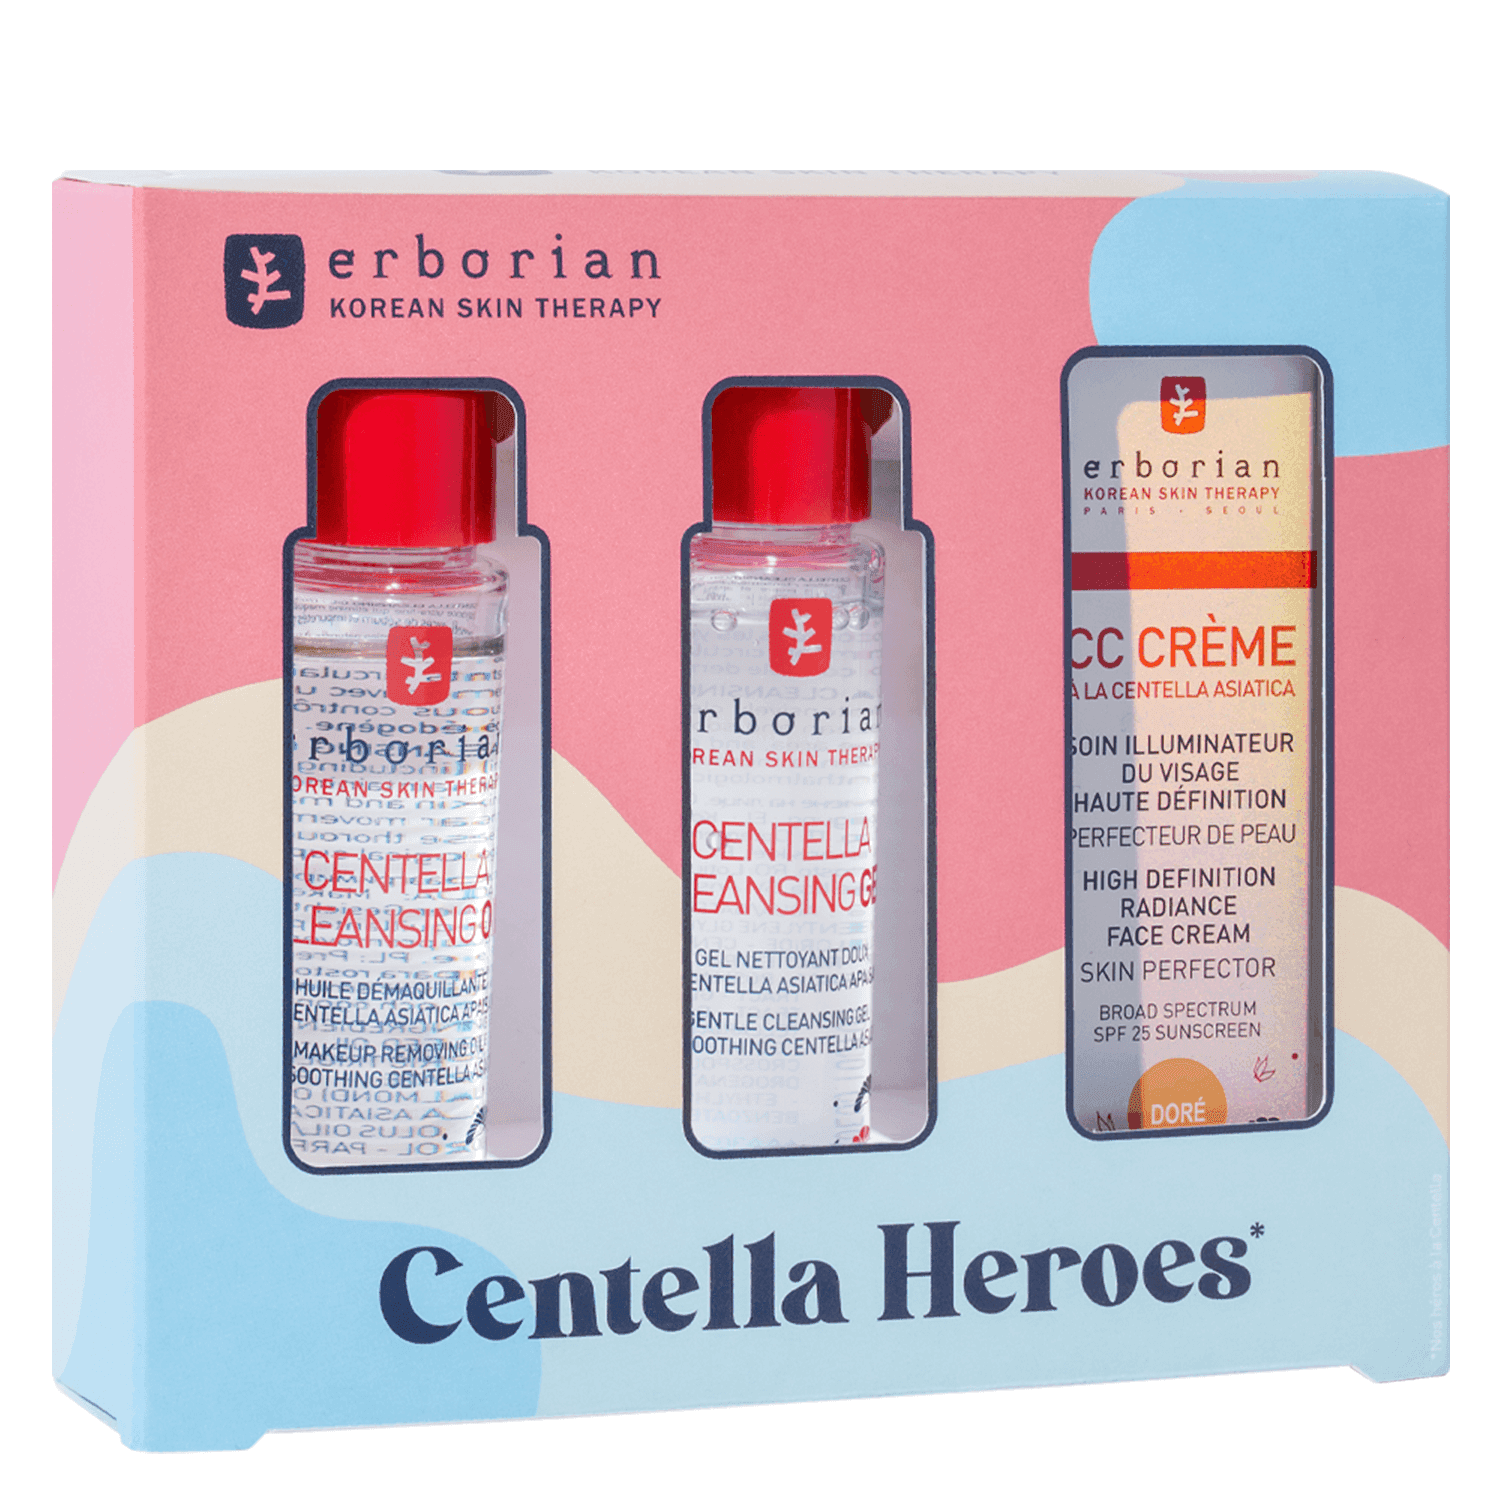 Centella - Heroes Doré Kit